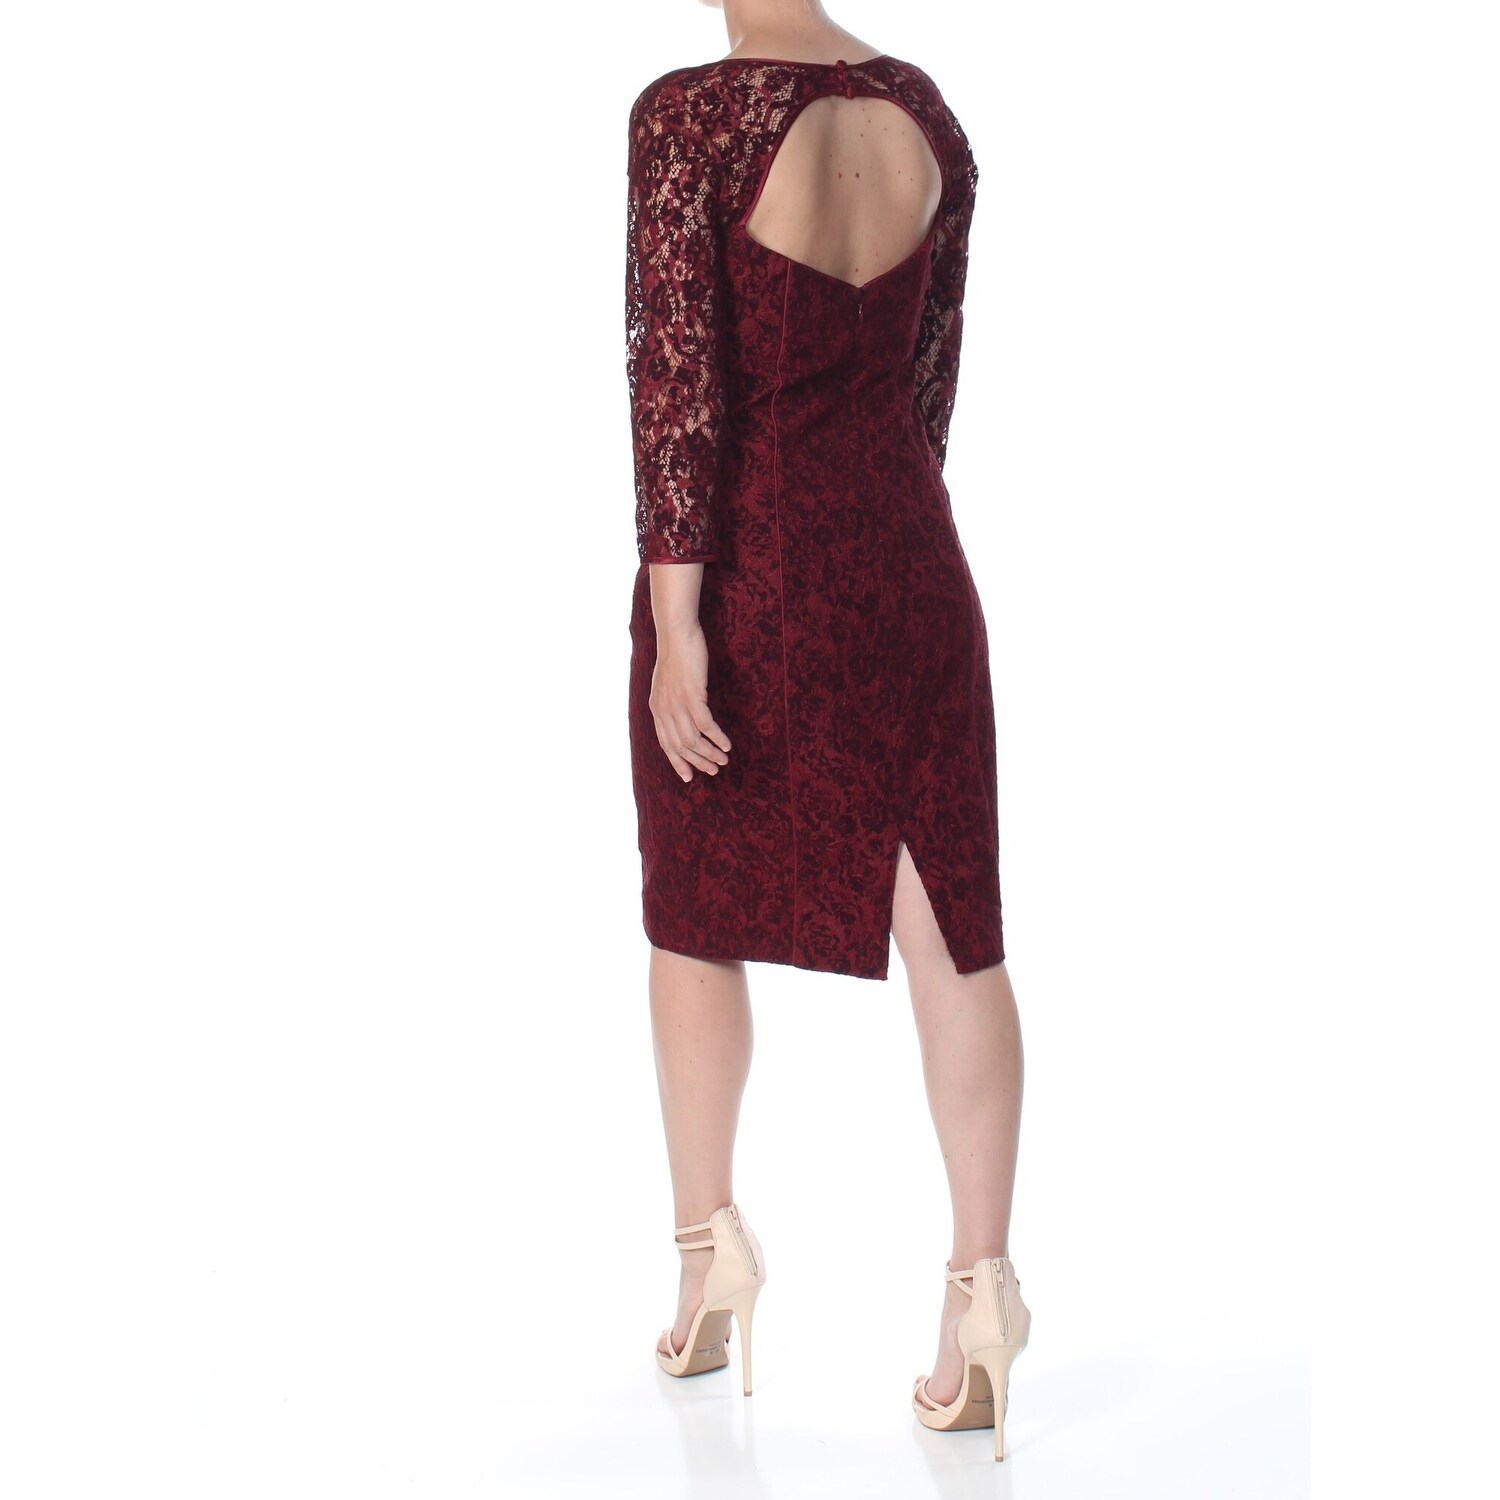 burgundy sheath dress